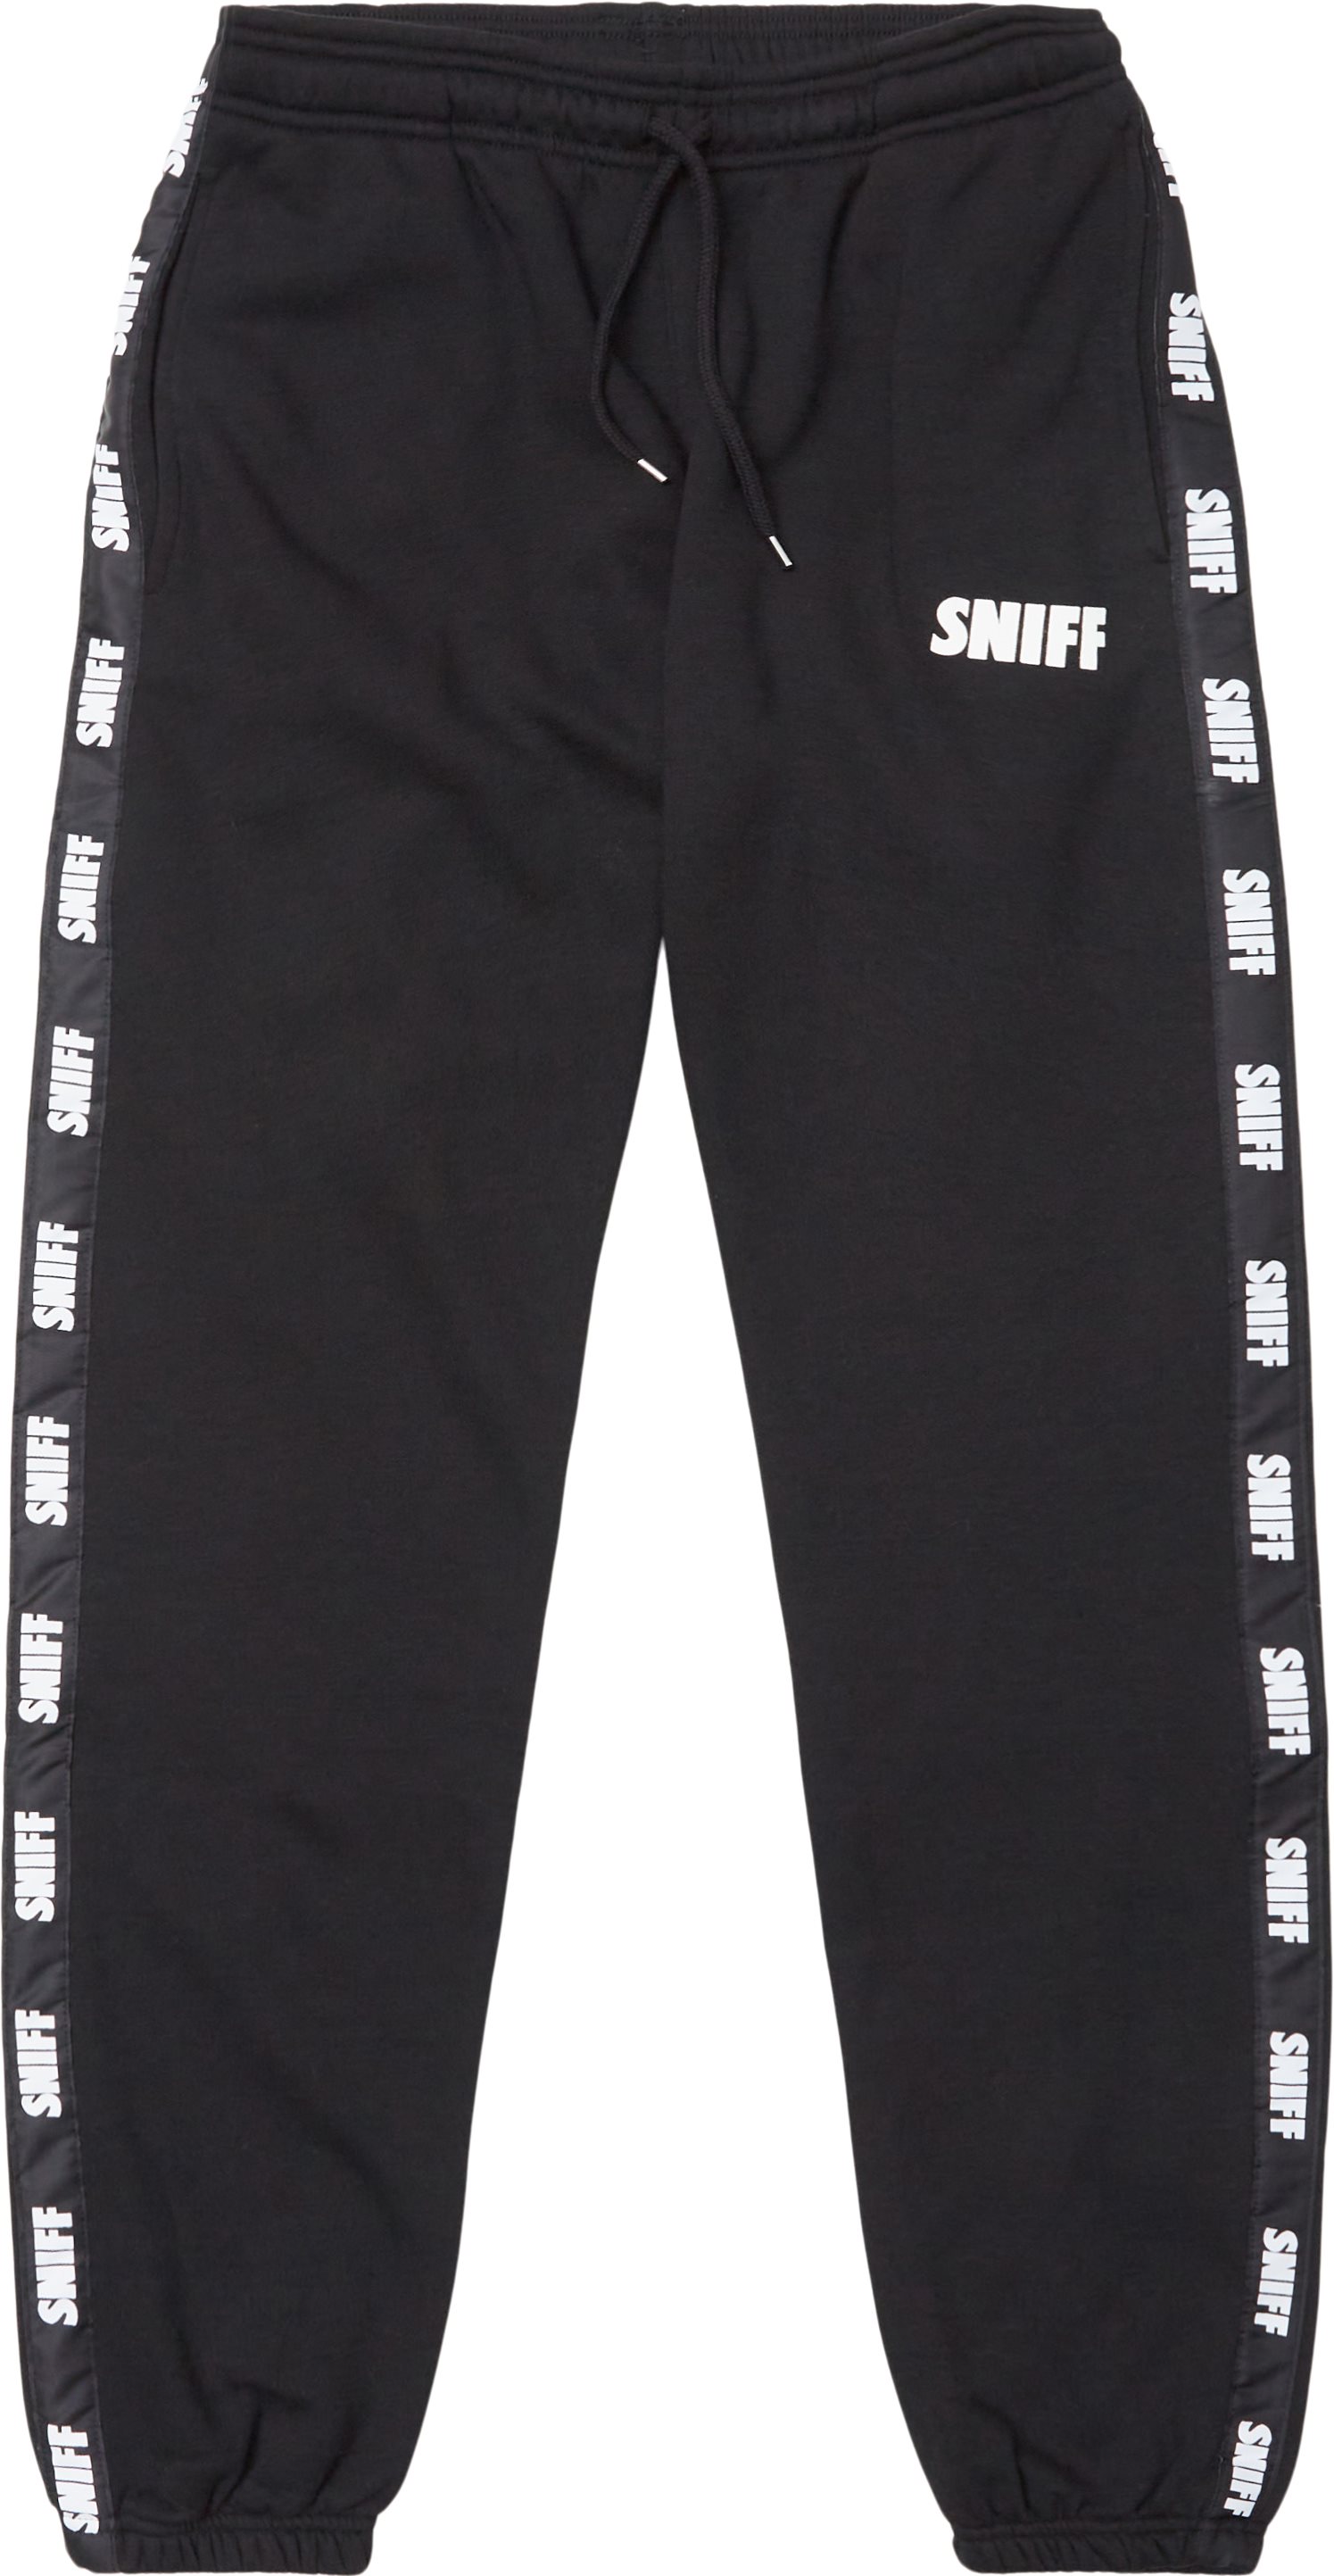 Wolf sweatpants - Trousers - Regular fit - Black